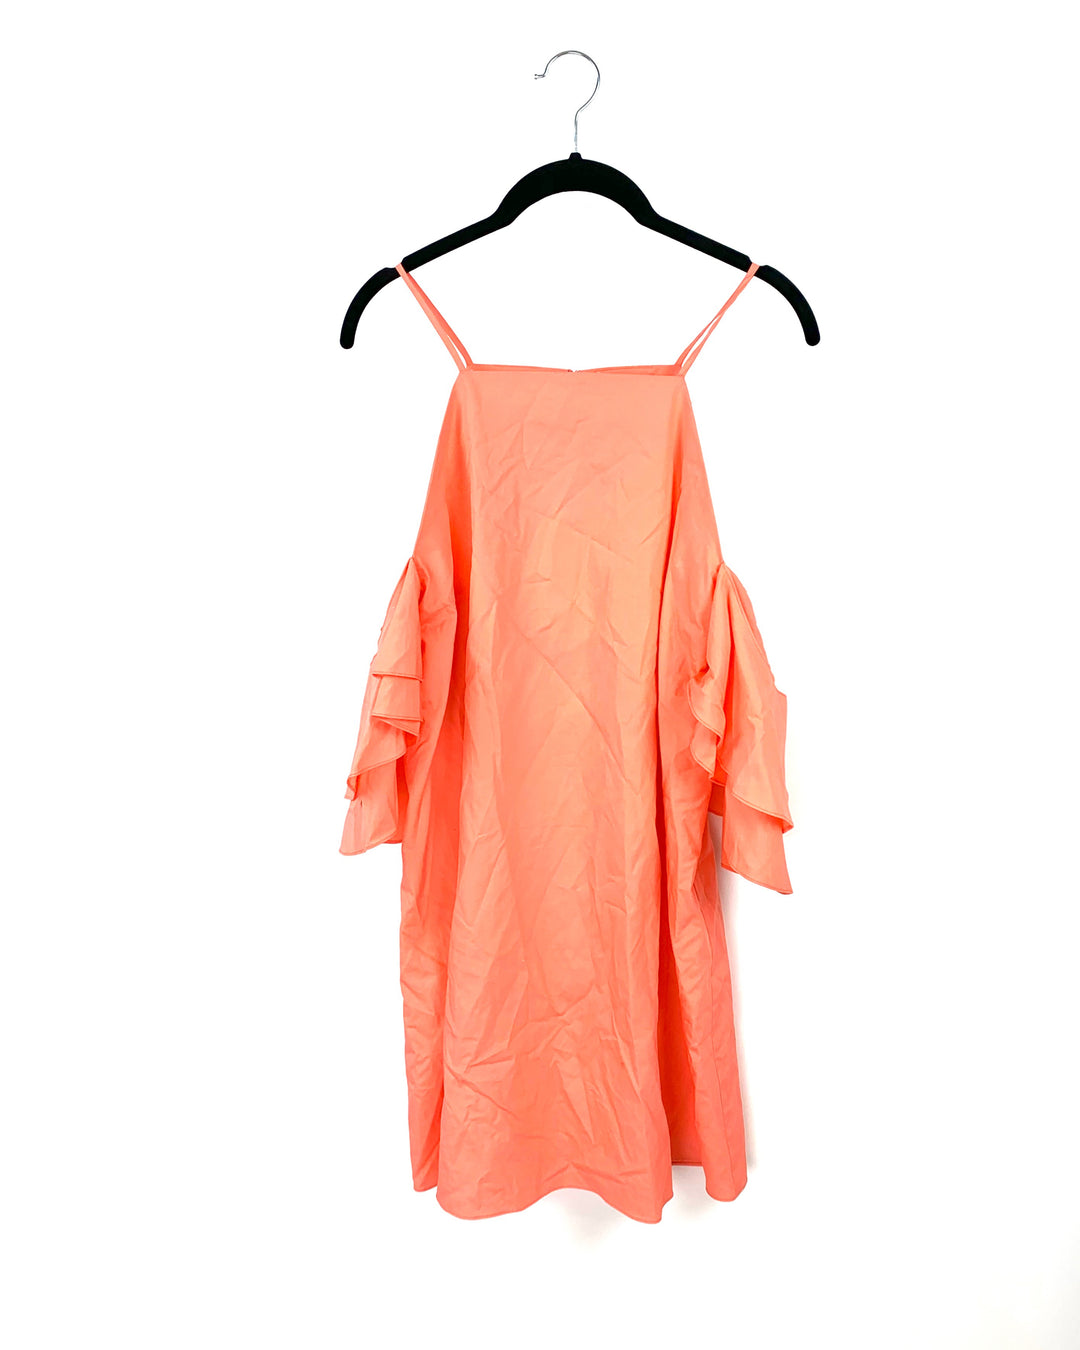 Orange Ruffle Sleeve Dress - Small